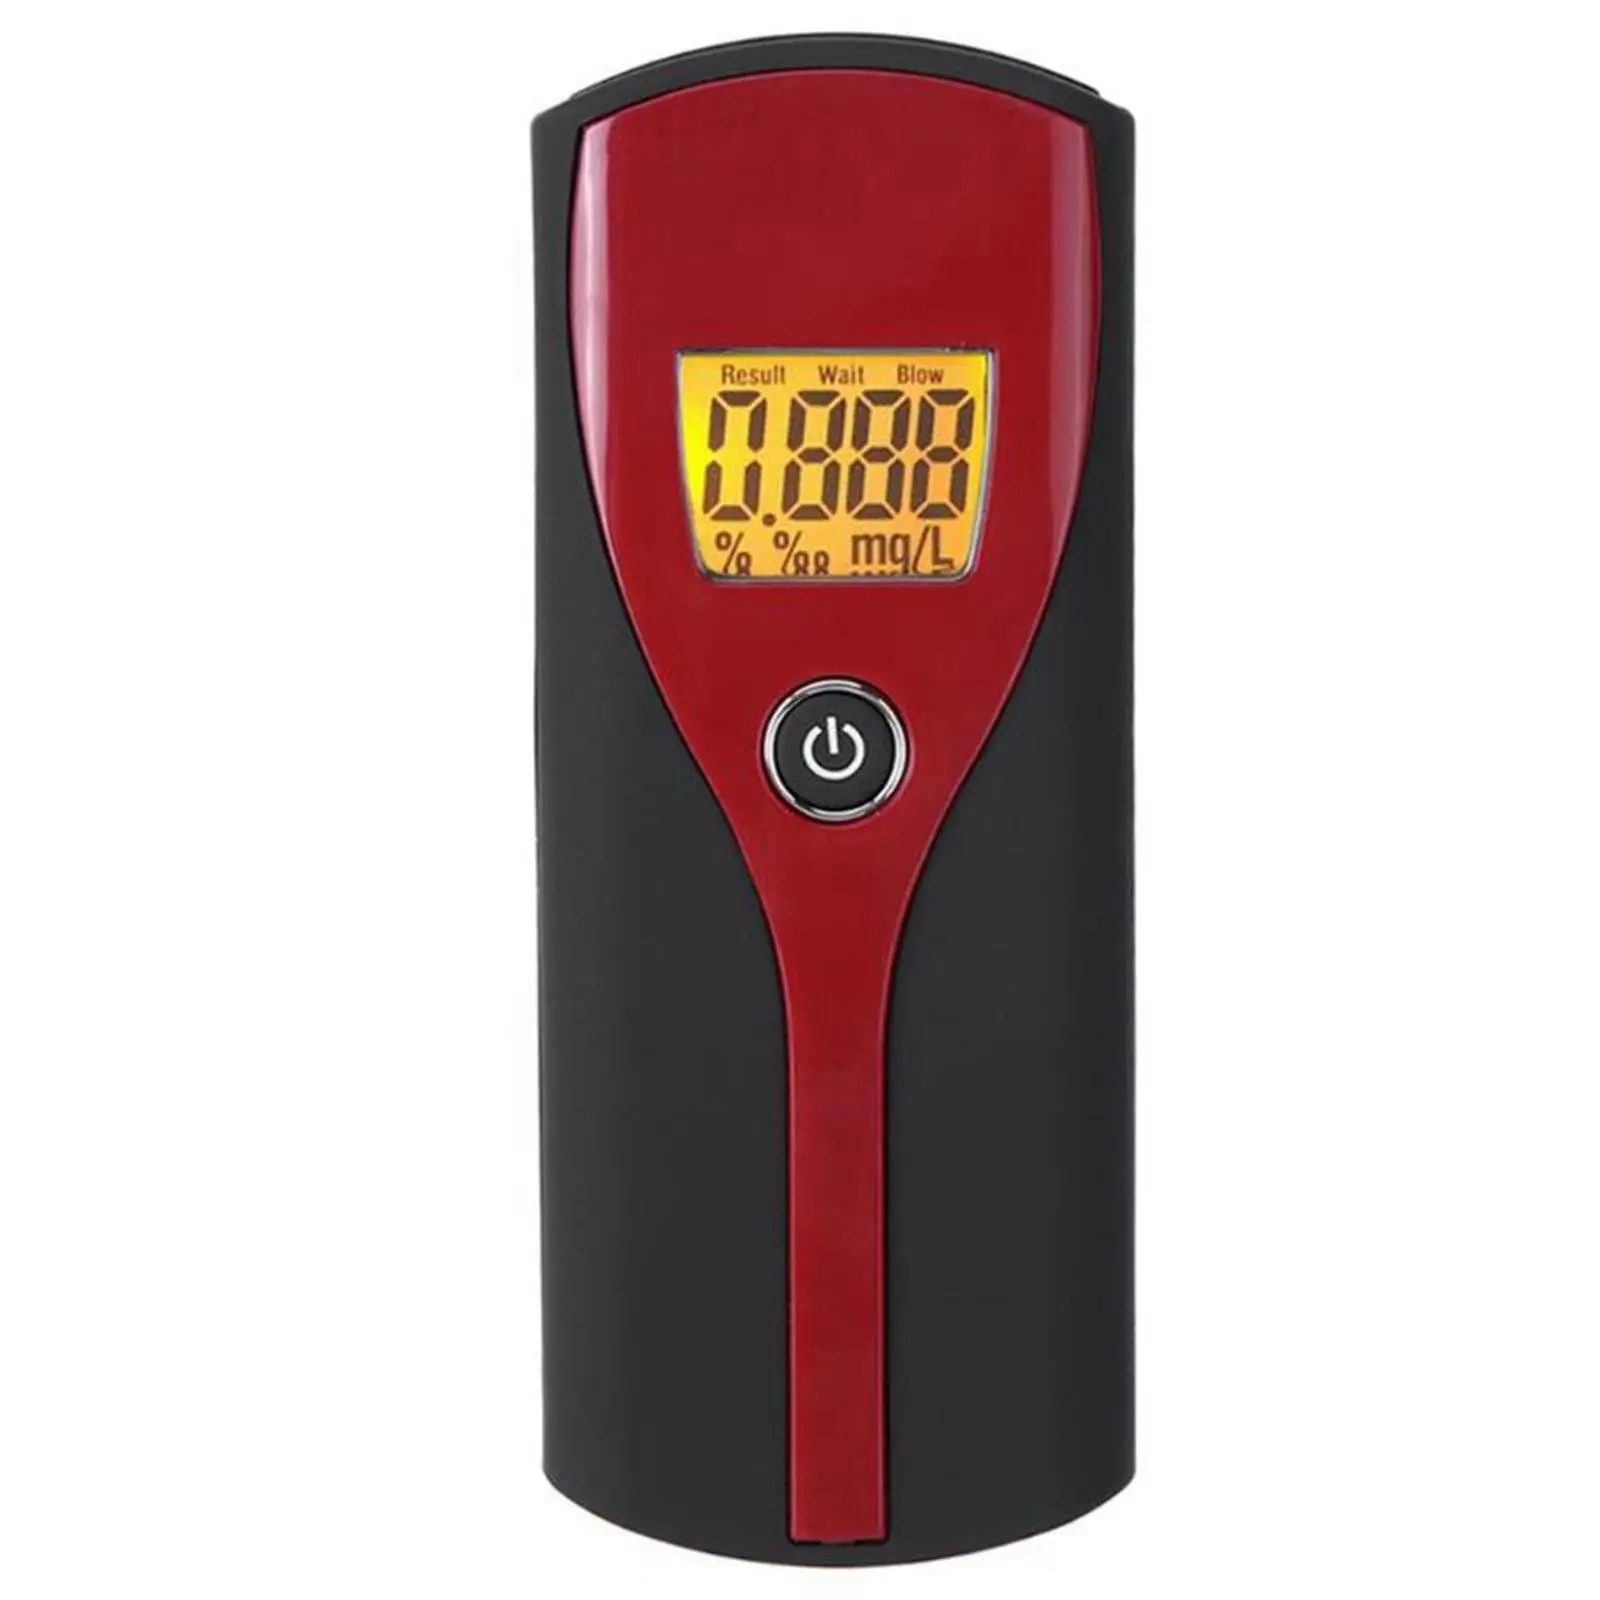 Sensor Breath Alcohol Tester Detector Breathalyzer Analyzer Orange Backlight Display High-Accuracy Fast for Clean bac Testing